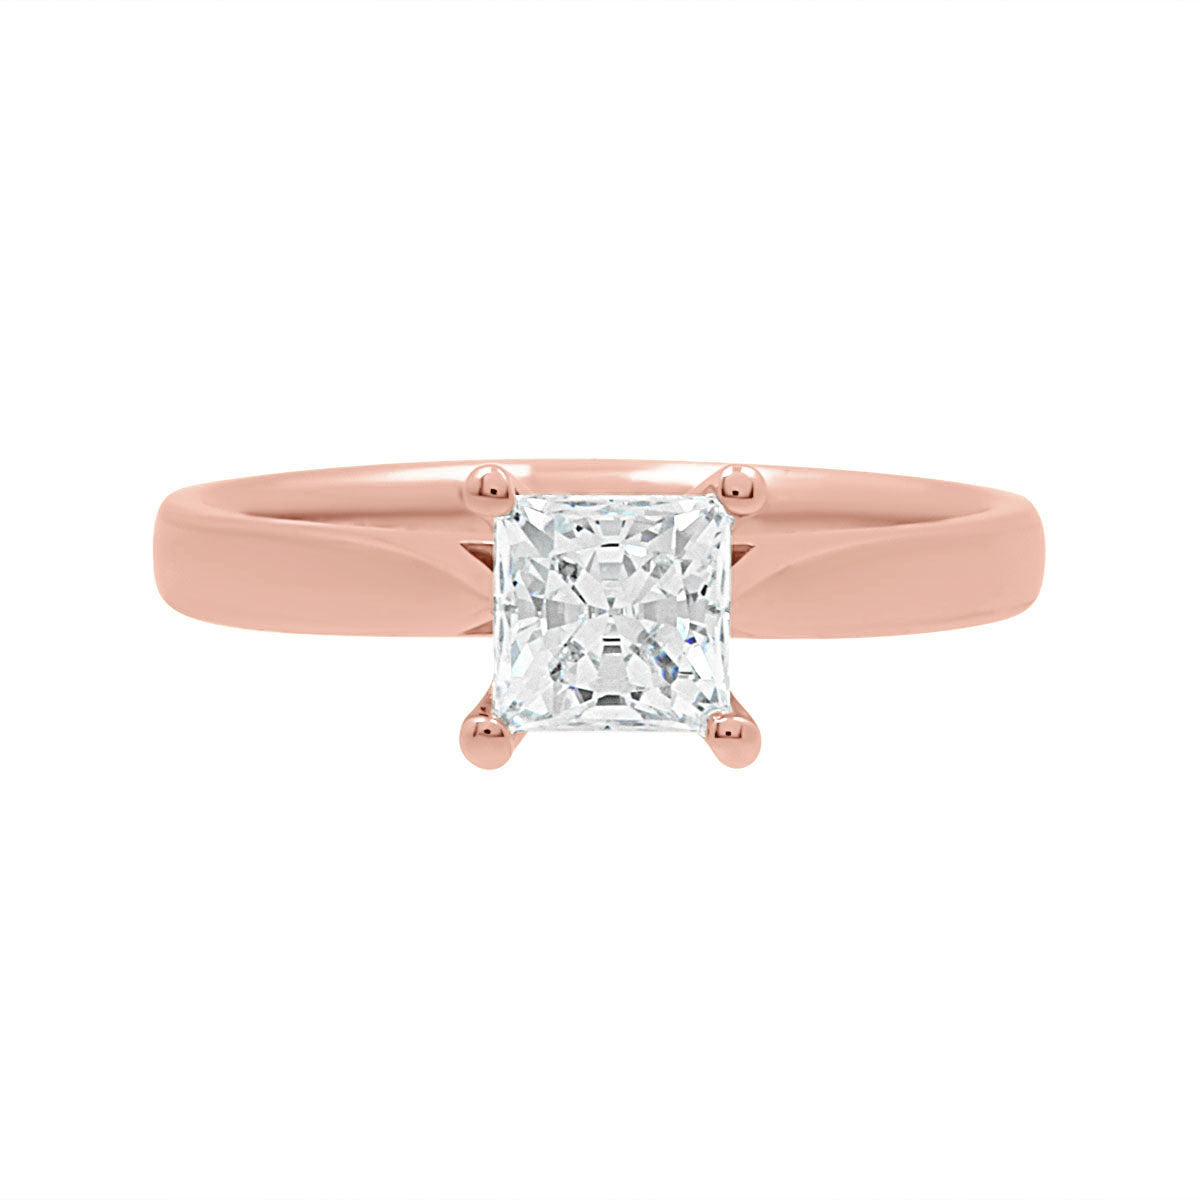 Princess Cut Diamond Ring in rose gold